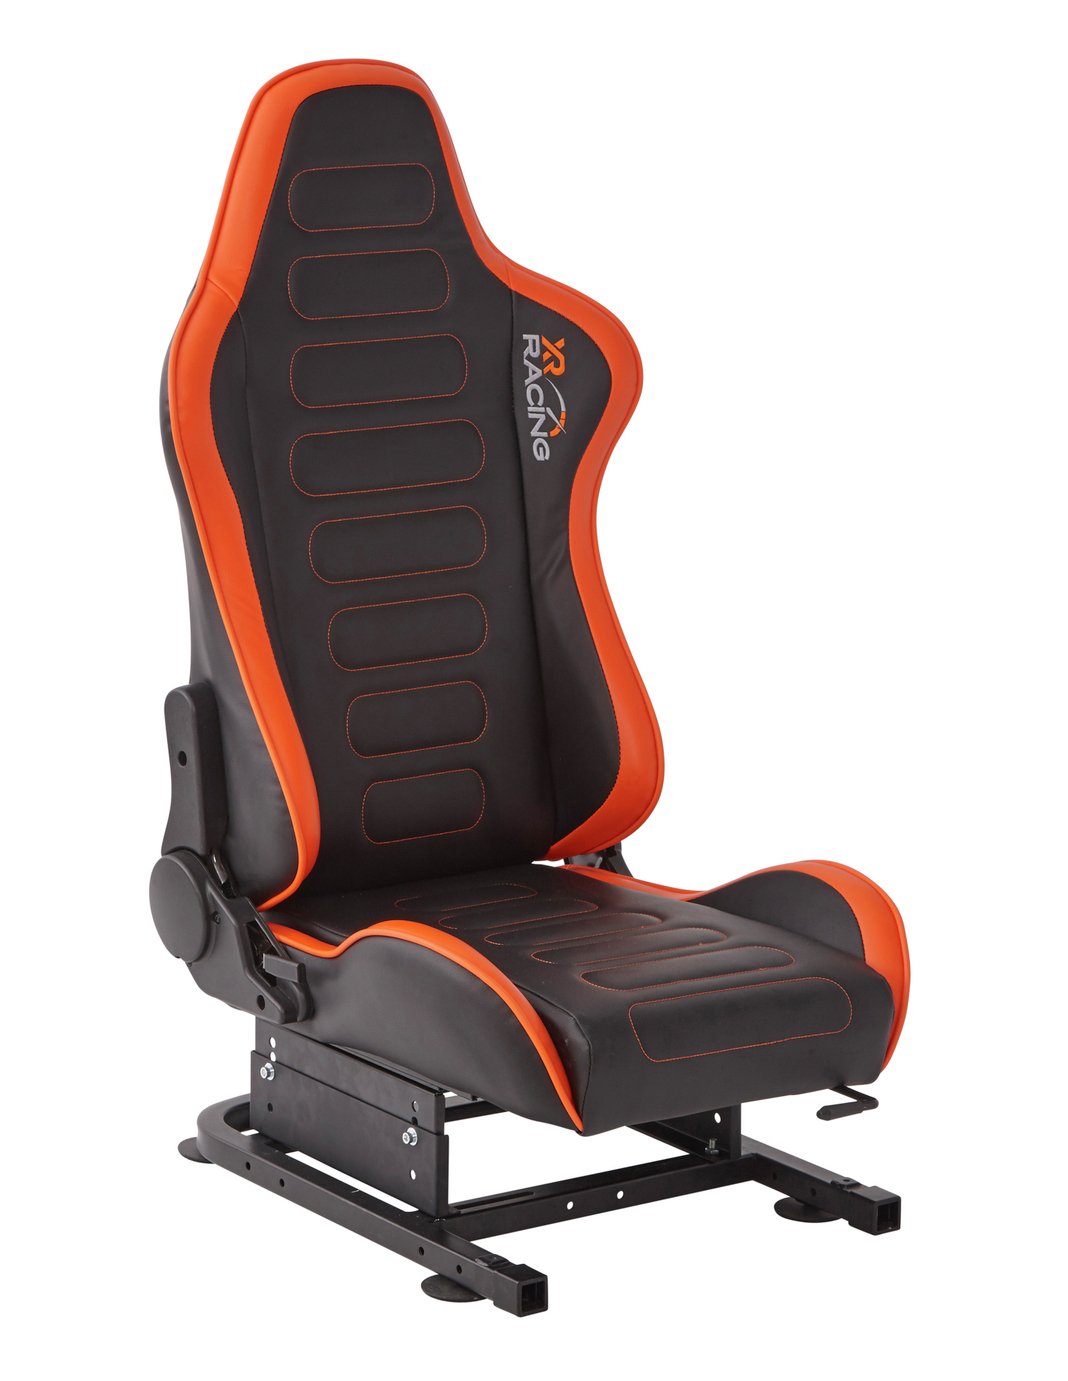 X-Rocker XR Chicane Racing Gaming Chair & Bracket Review